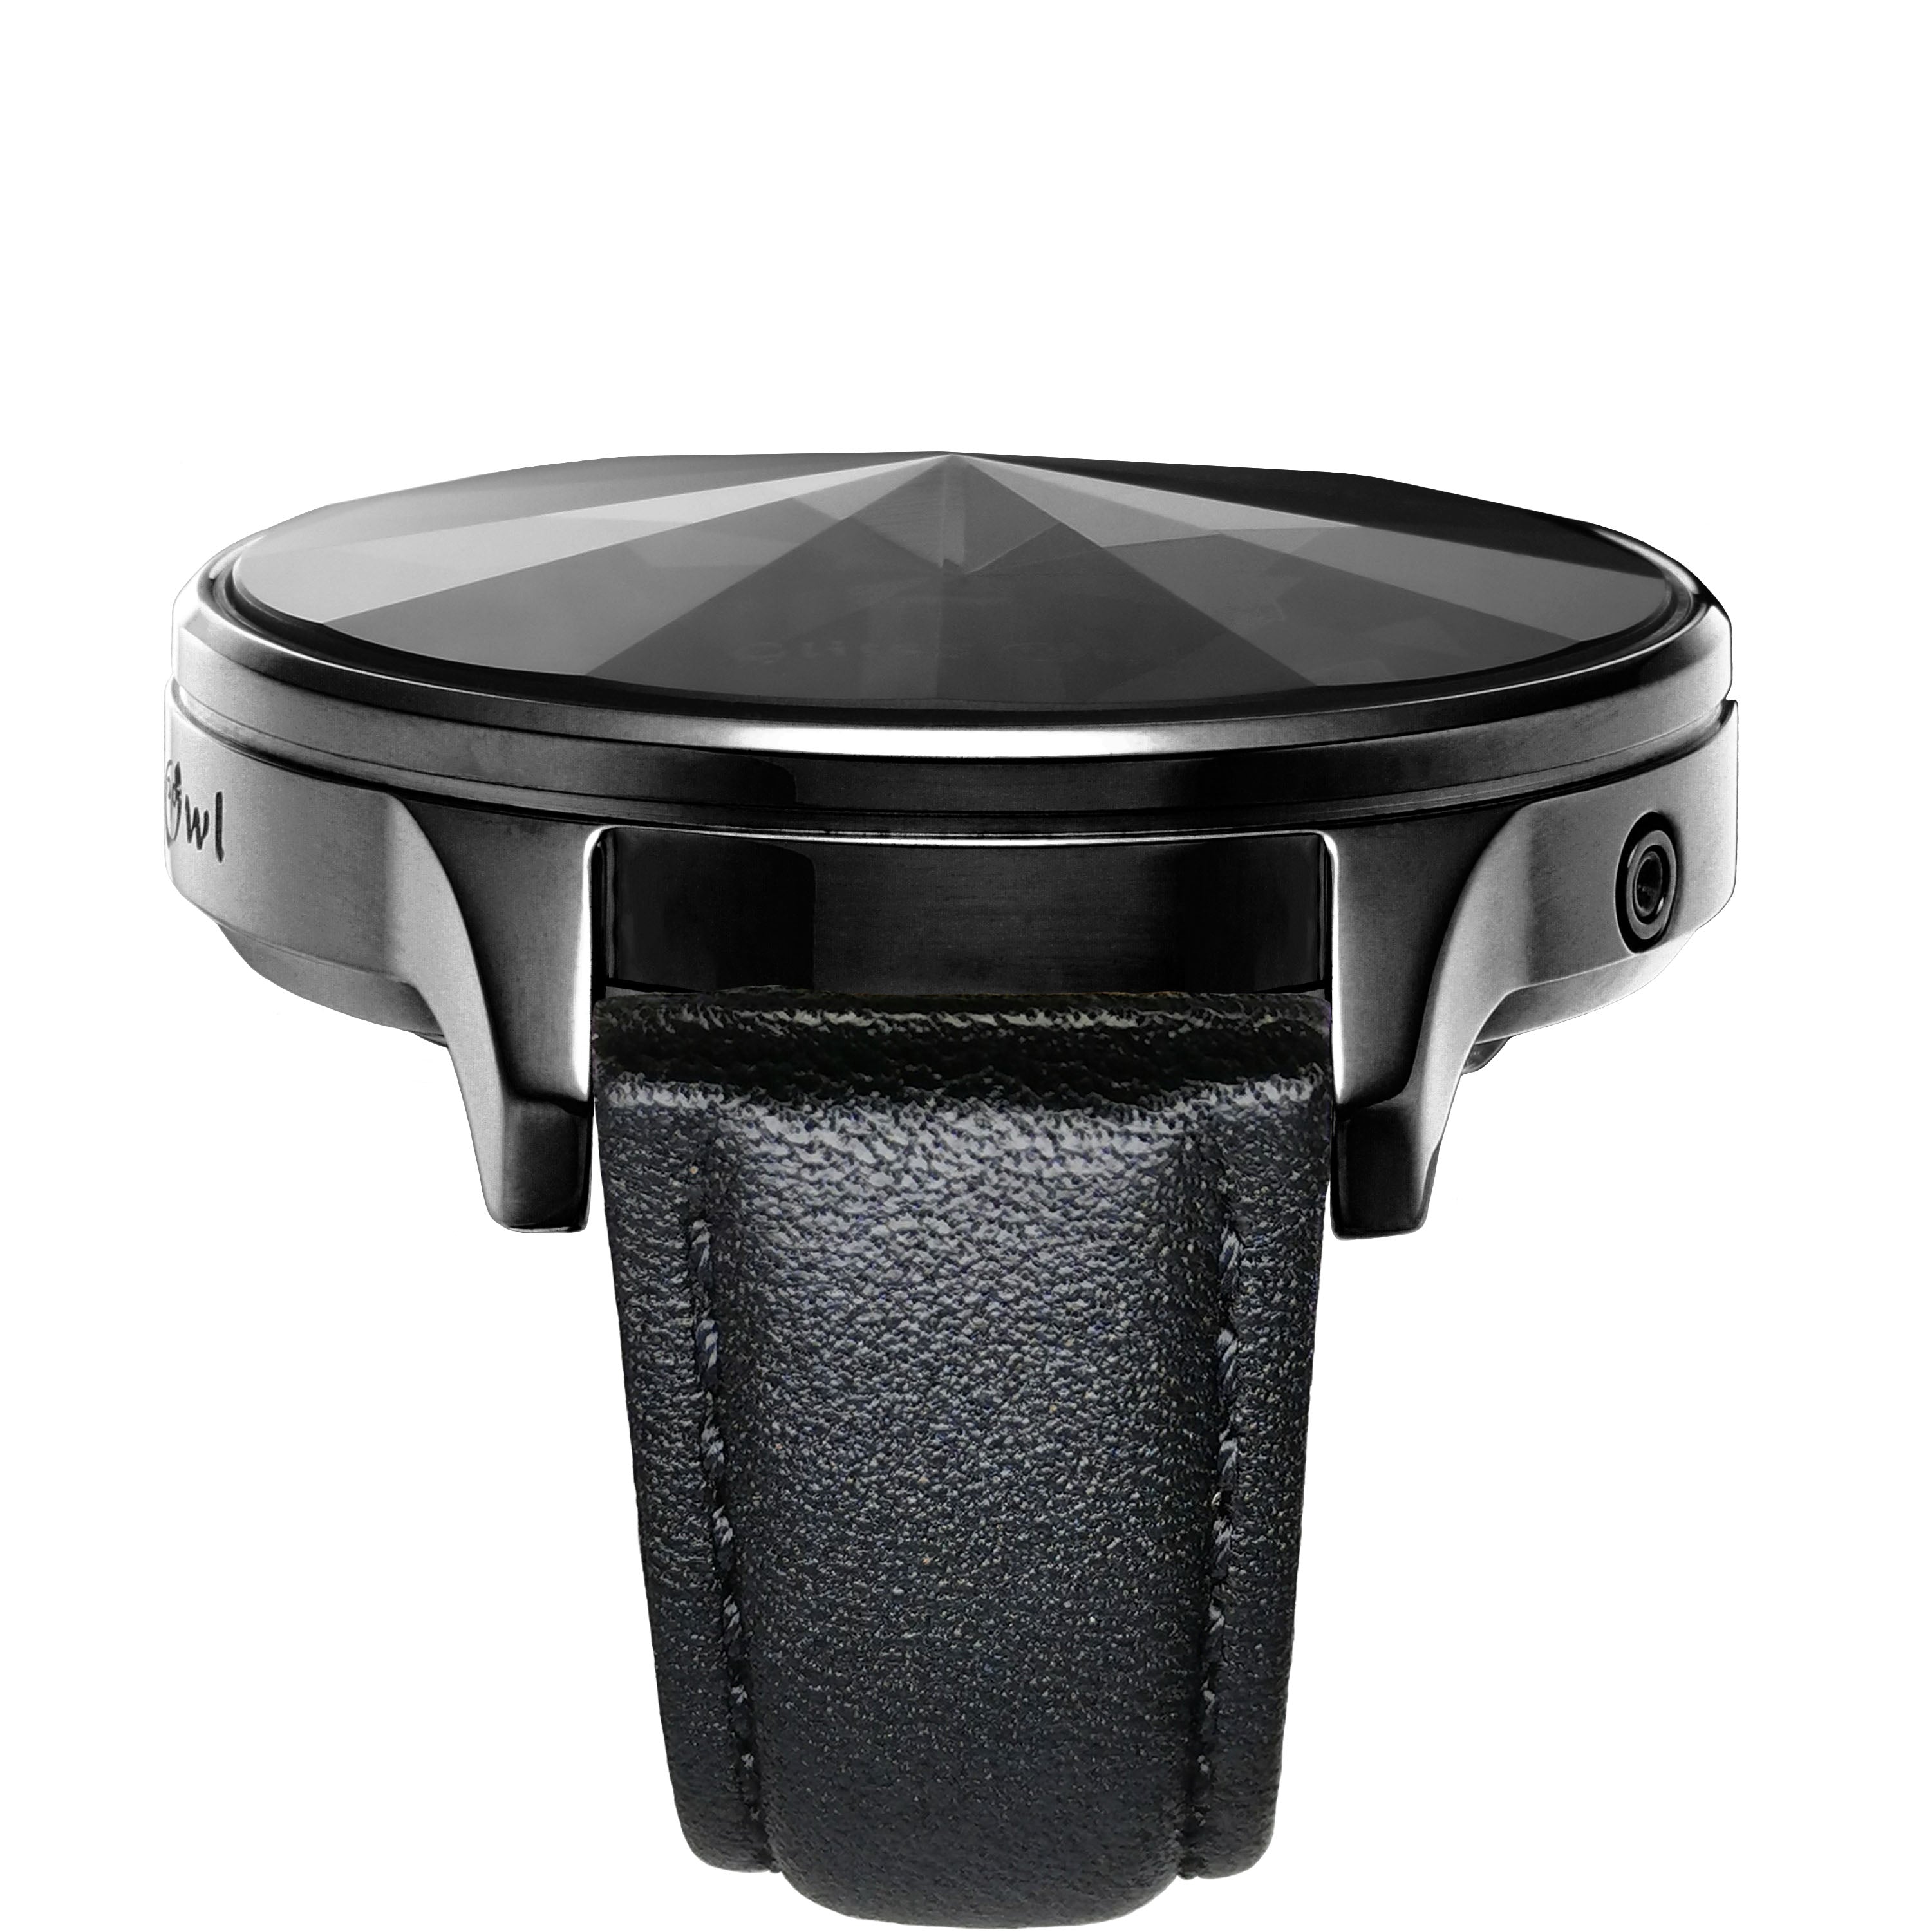 THE DIAMOND LED 黒色ステンレス鋼ブラックレザーバンド腕時計